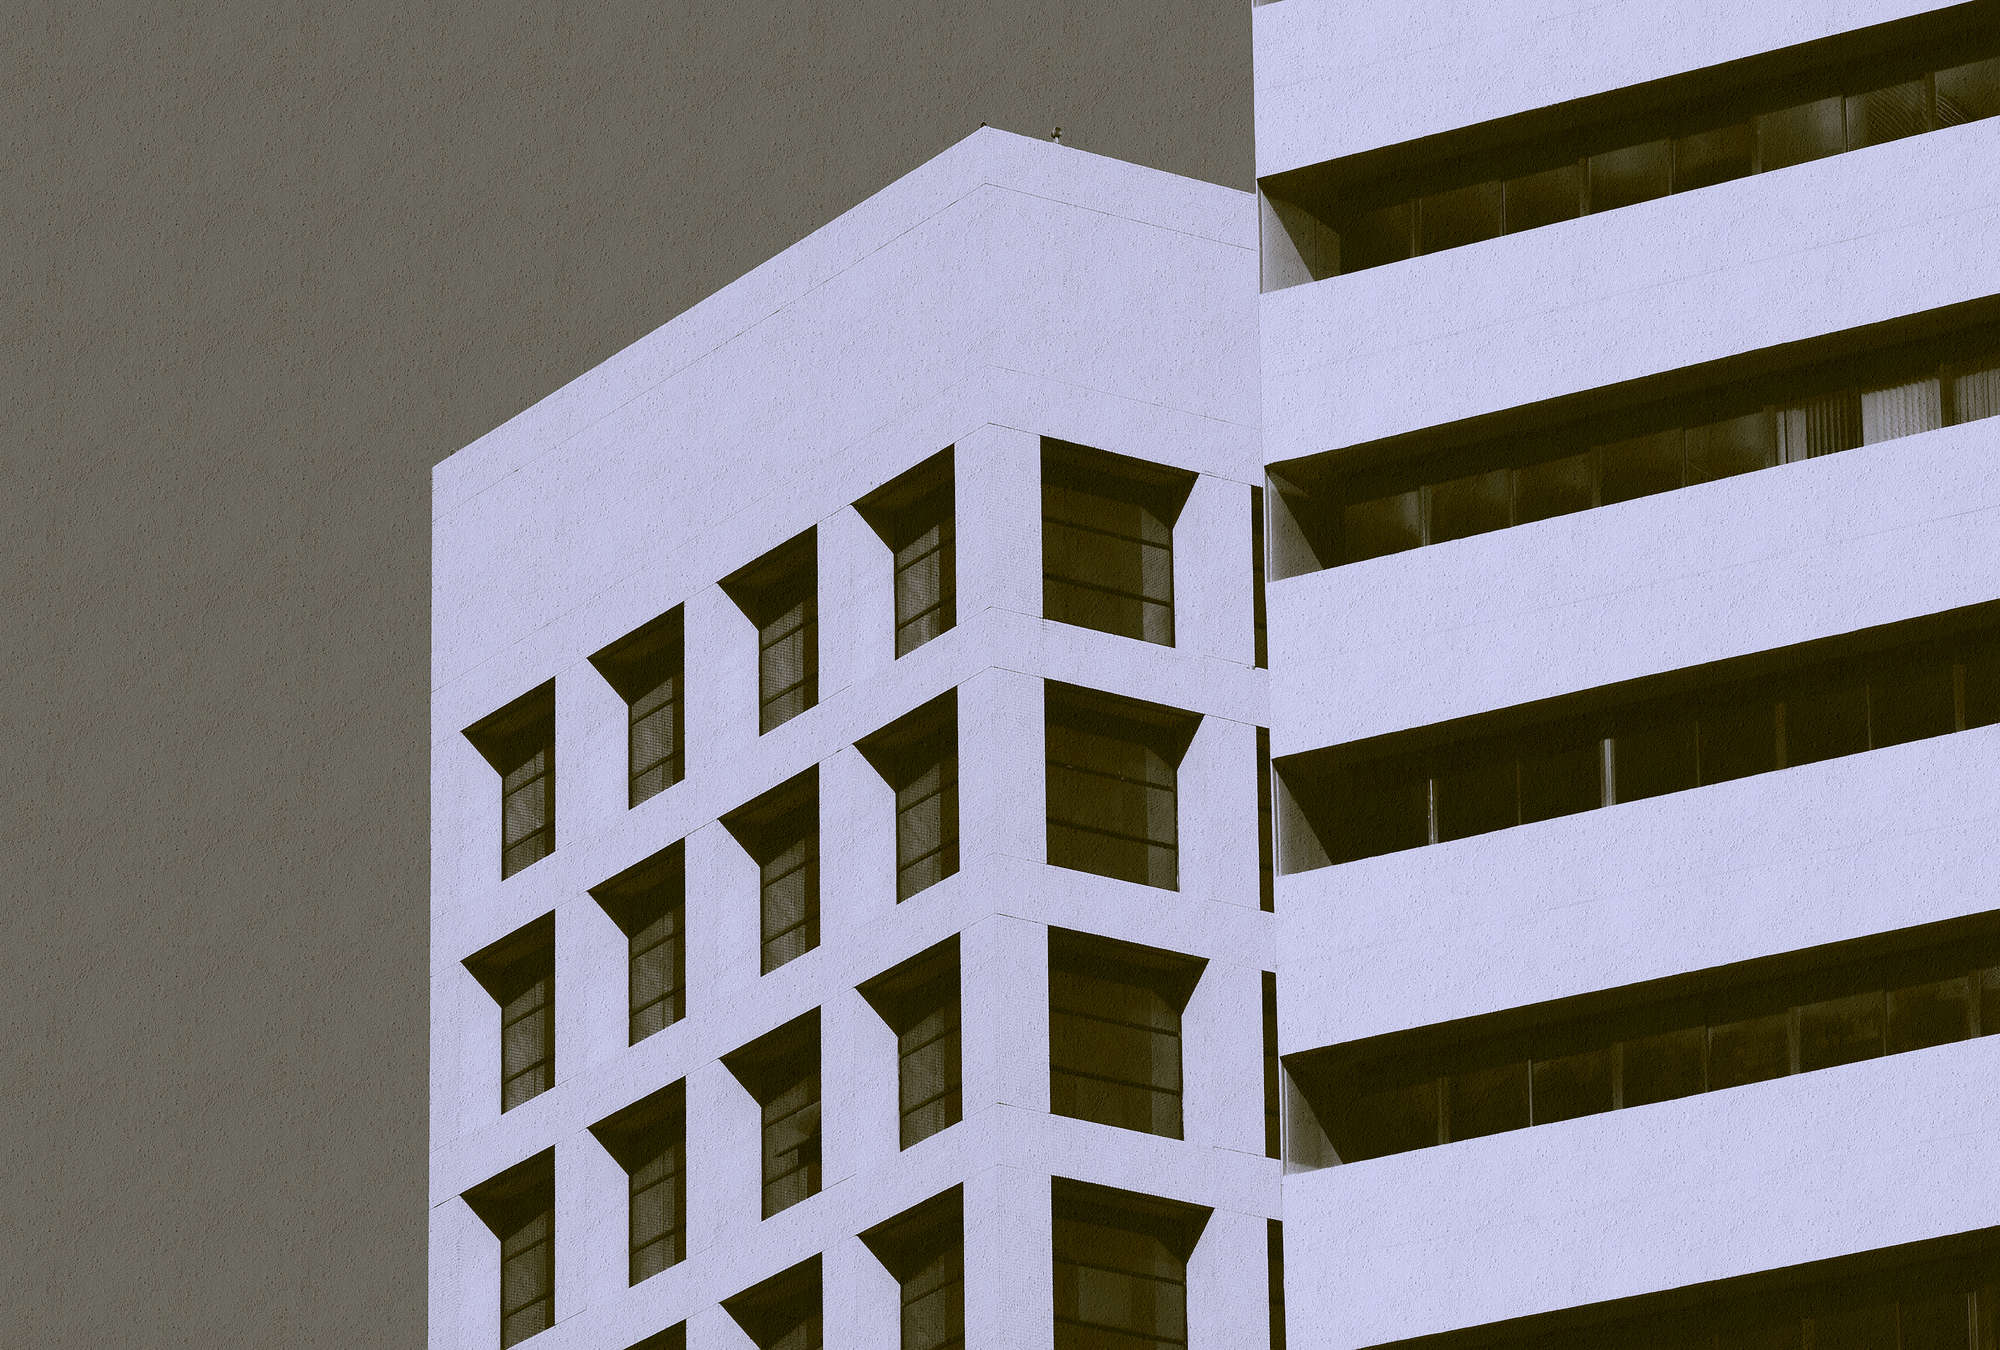             Skyscraper 1 - Photo wallpaper with building in retro look in Raupuz structure - Black, Taupe | Structure non-woven
        